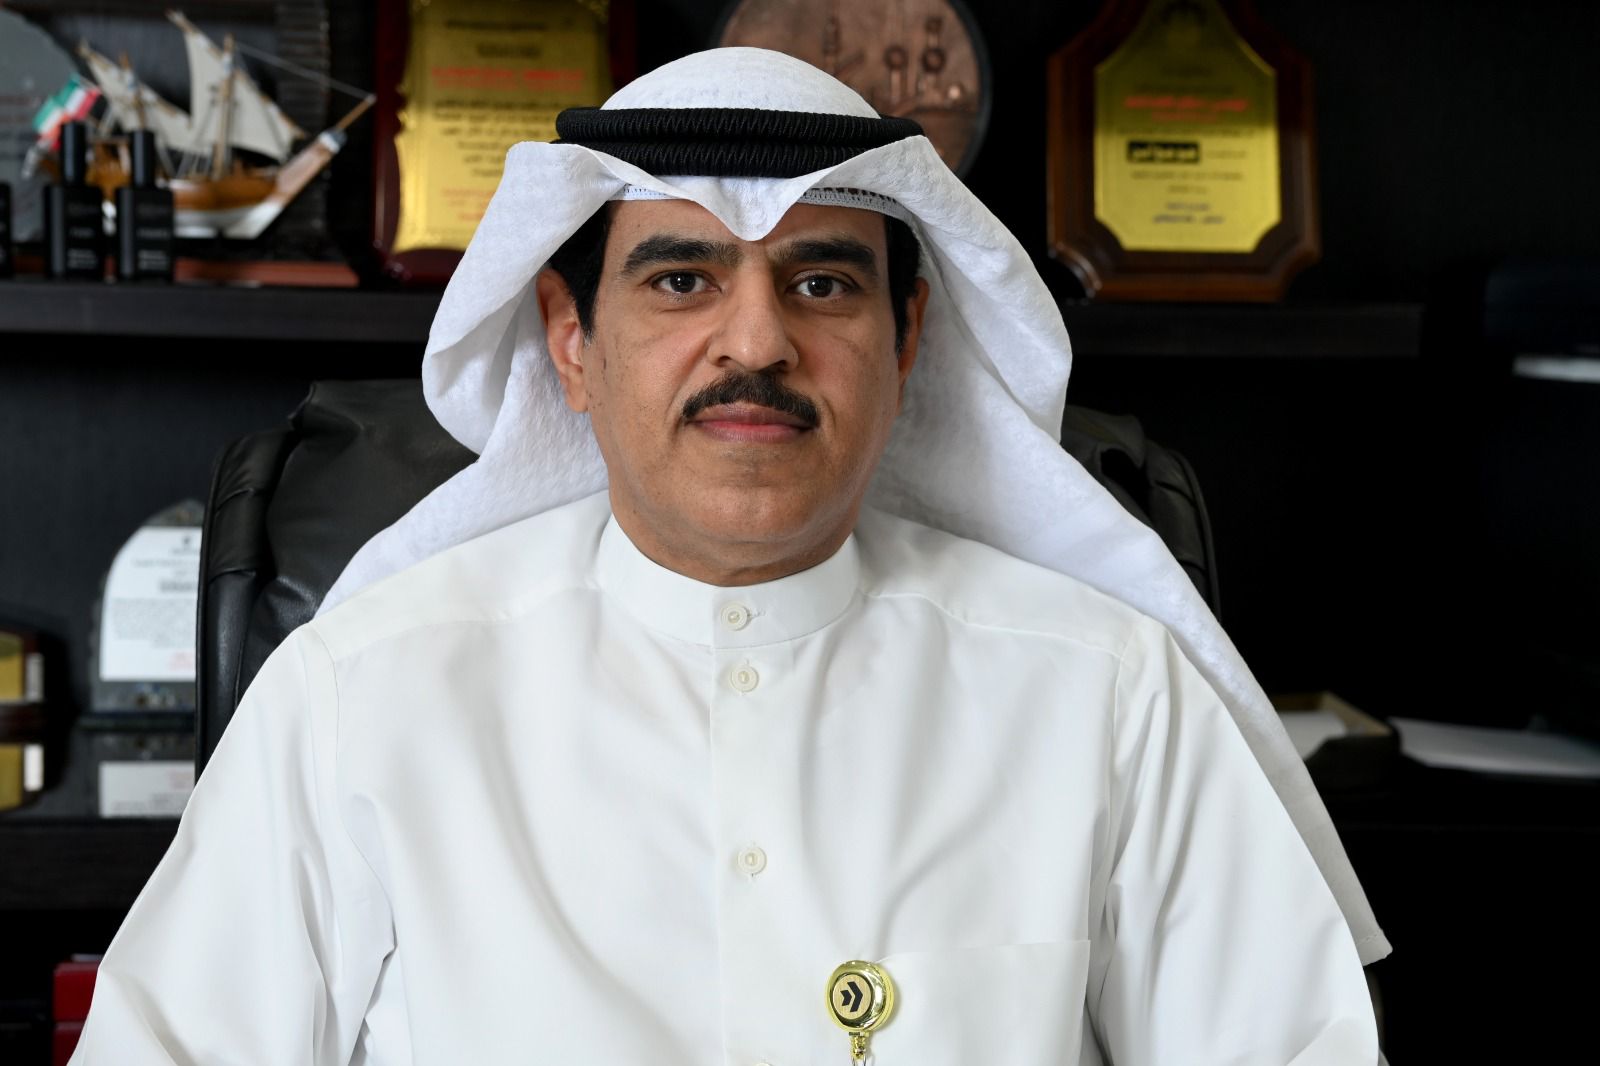 Deputy Director general for Kuwait International Airport affairs Saleh Al-Faddaghi